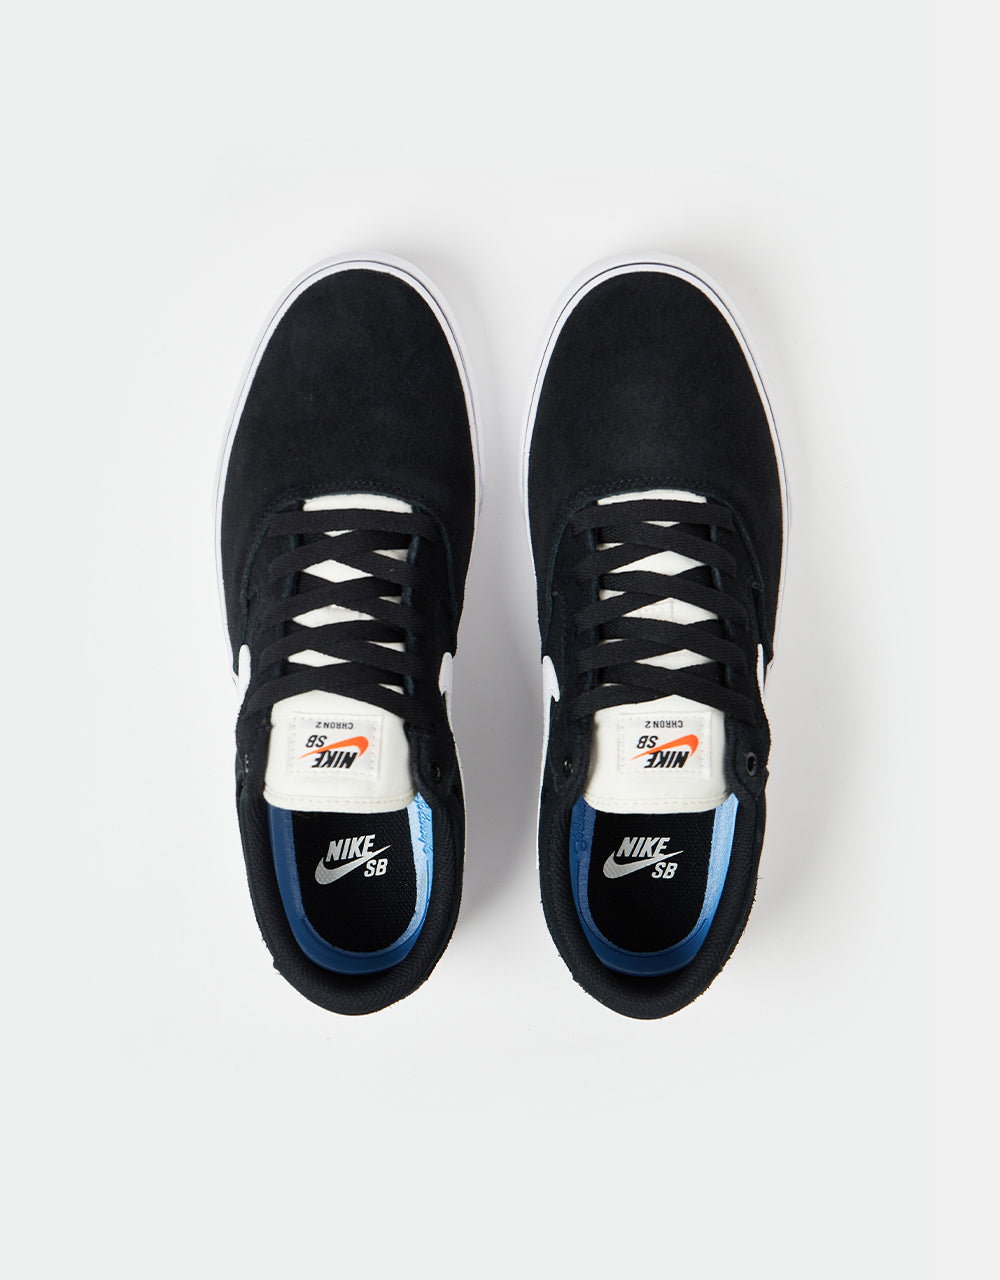 Nike SB Chron 2 Skate Shoes - Black/White-Black-Sail